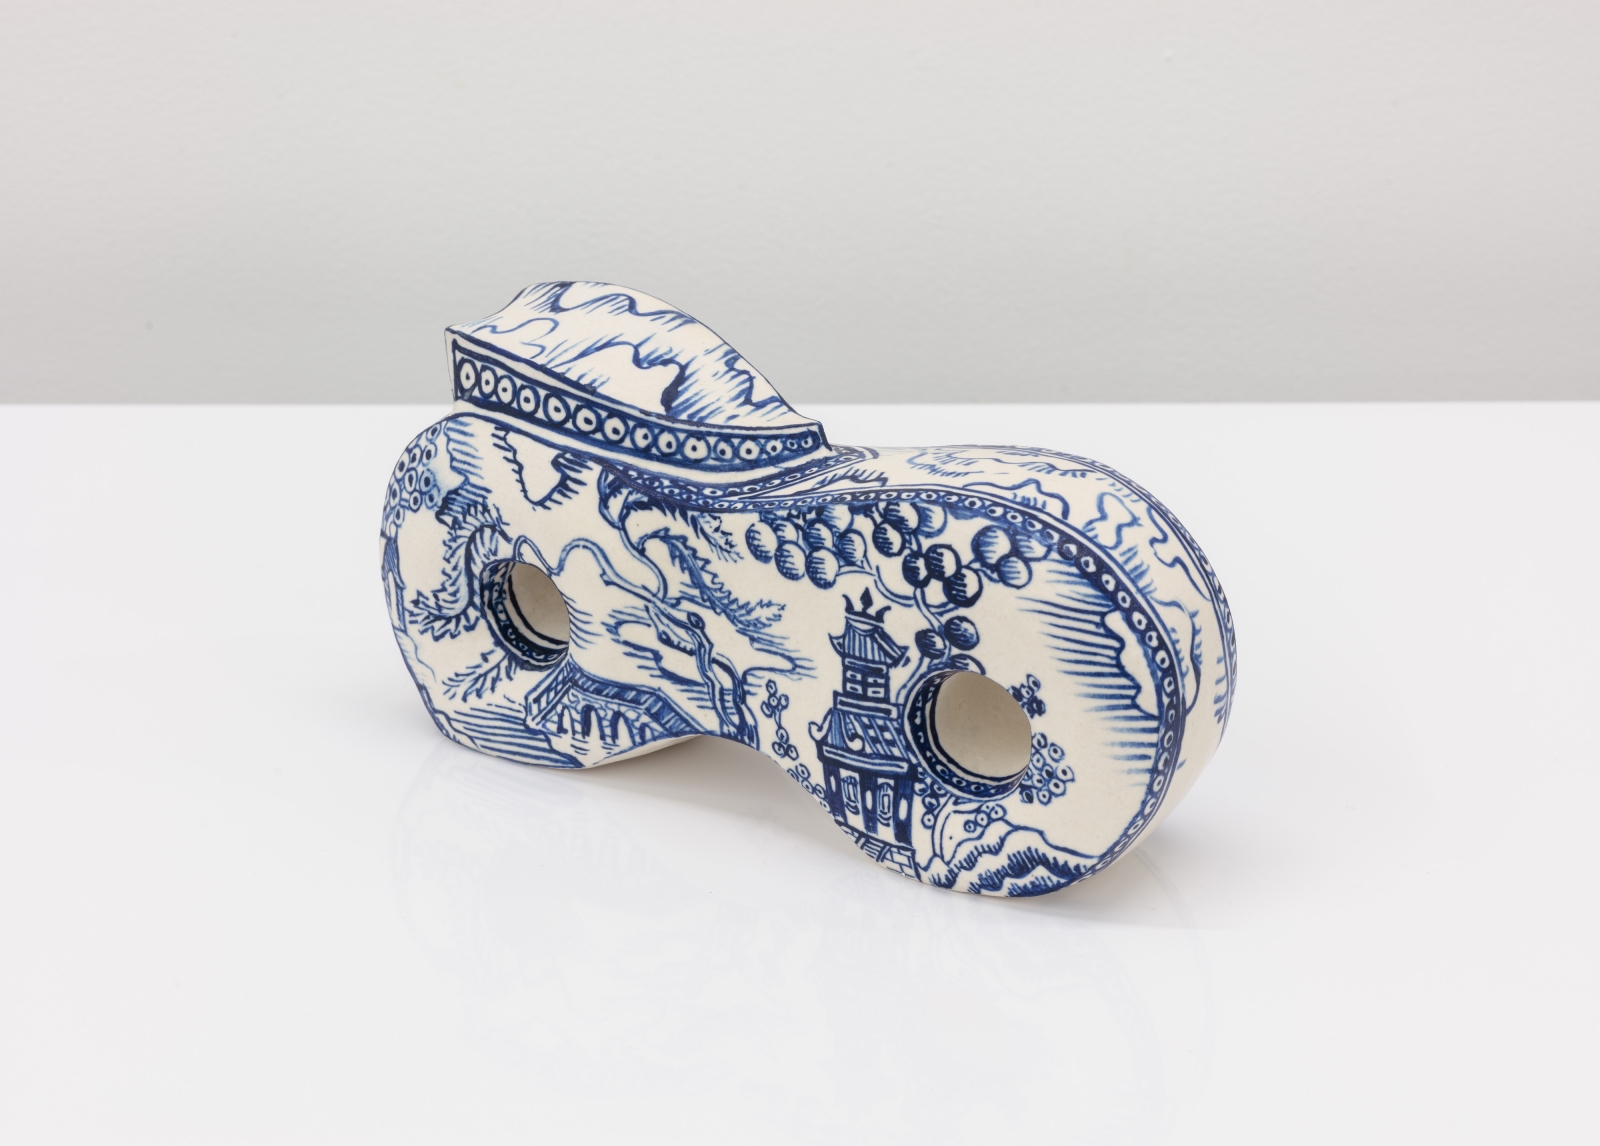 Ann Agee
Hand Warmers (231), 2019
Agee MFG back edge, Chinese on bottom
glazed English porcelain
7 x 2 1/2 x 3 1/2 ins.
17.8 x 6.3 x 8.9 cm